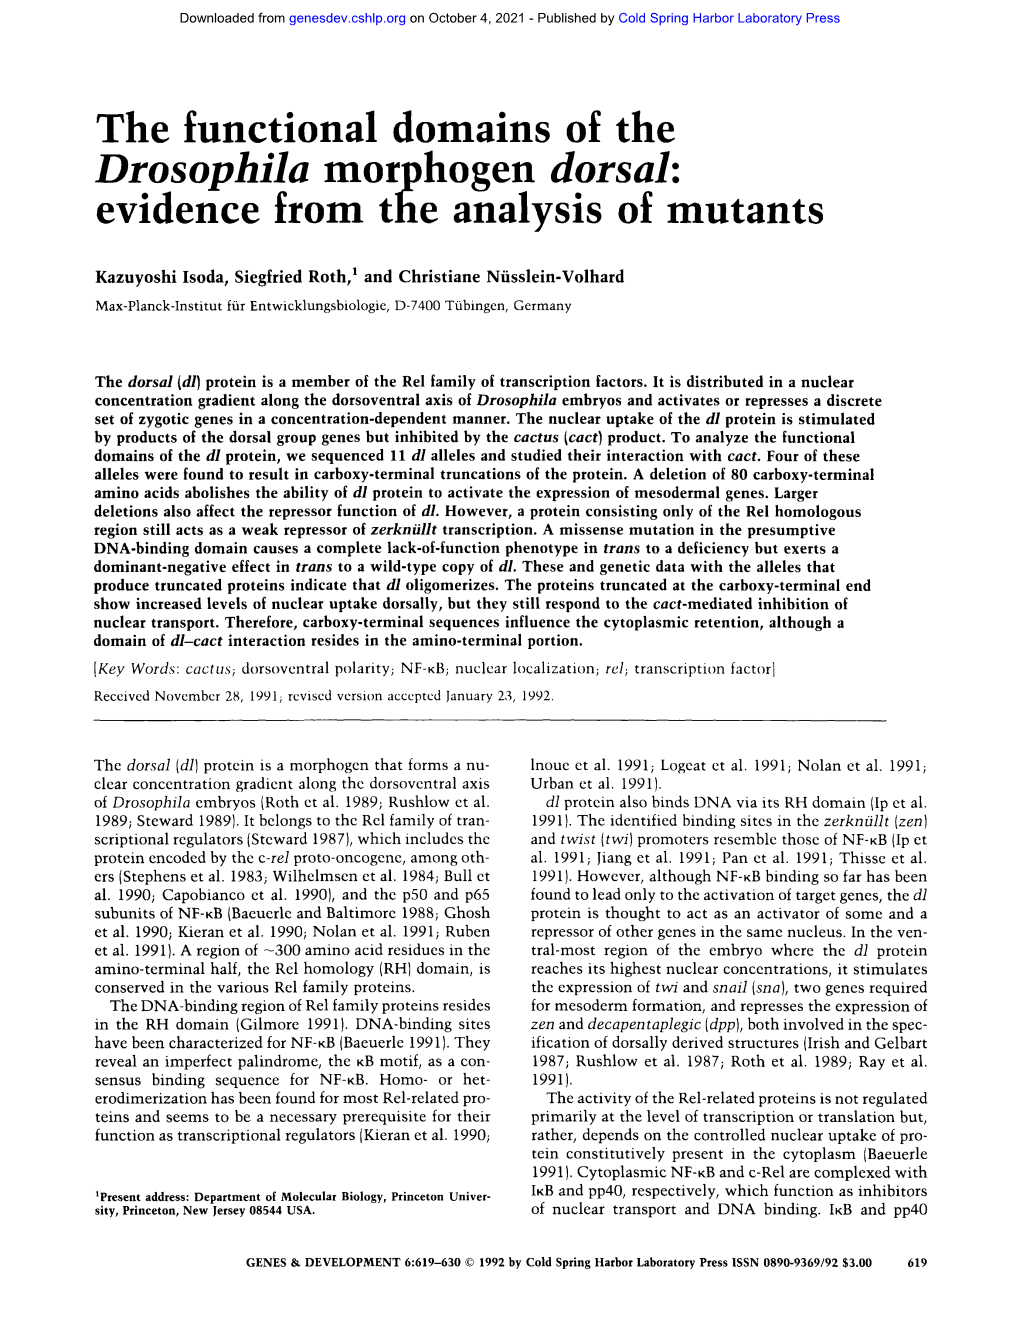 The Functional Domains of the Drosophila Morphogen Dorsal: Evidence from the Analysis of Mutants